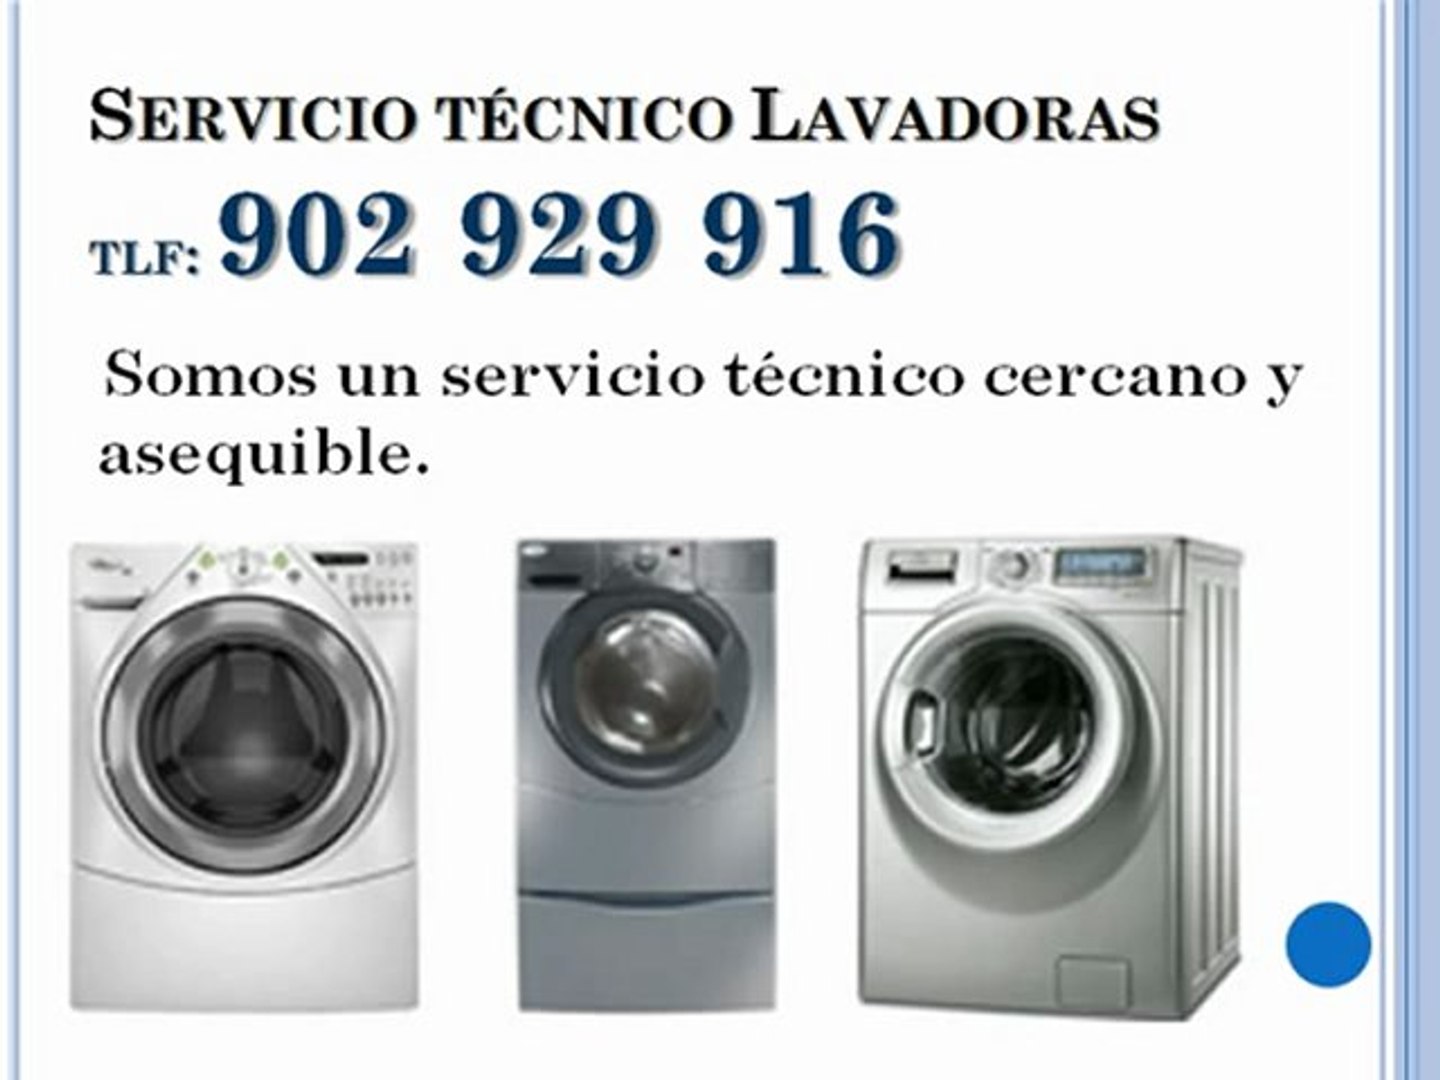 Reparación lavadoras Whirlpool - Servicio técnico Whirlpool Barcelona -  Teléfono 902 808 189 - video Dailymotion